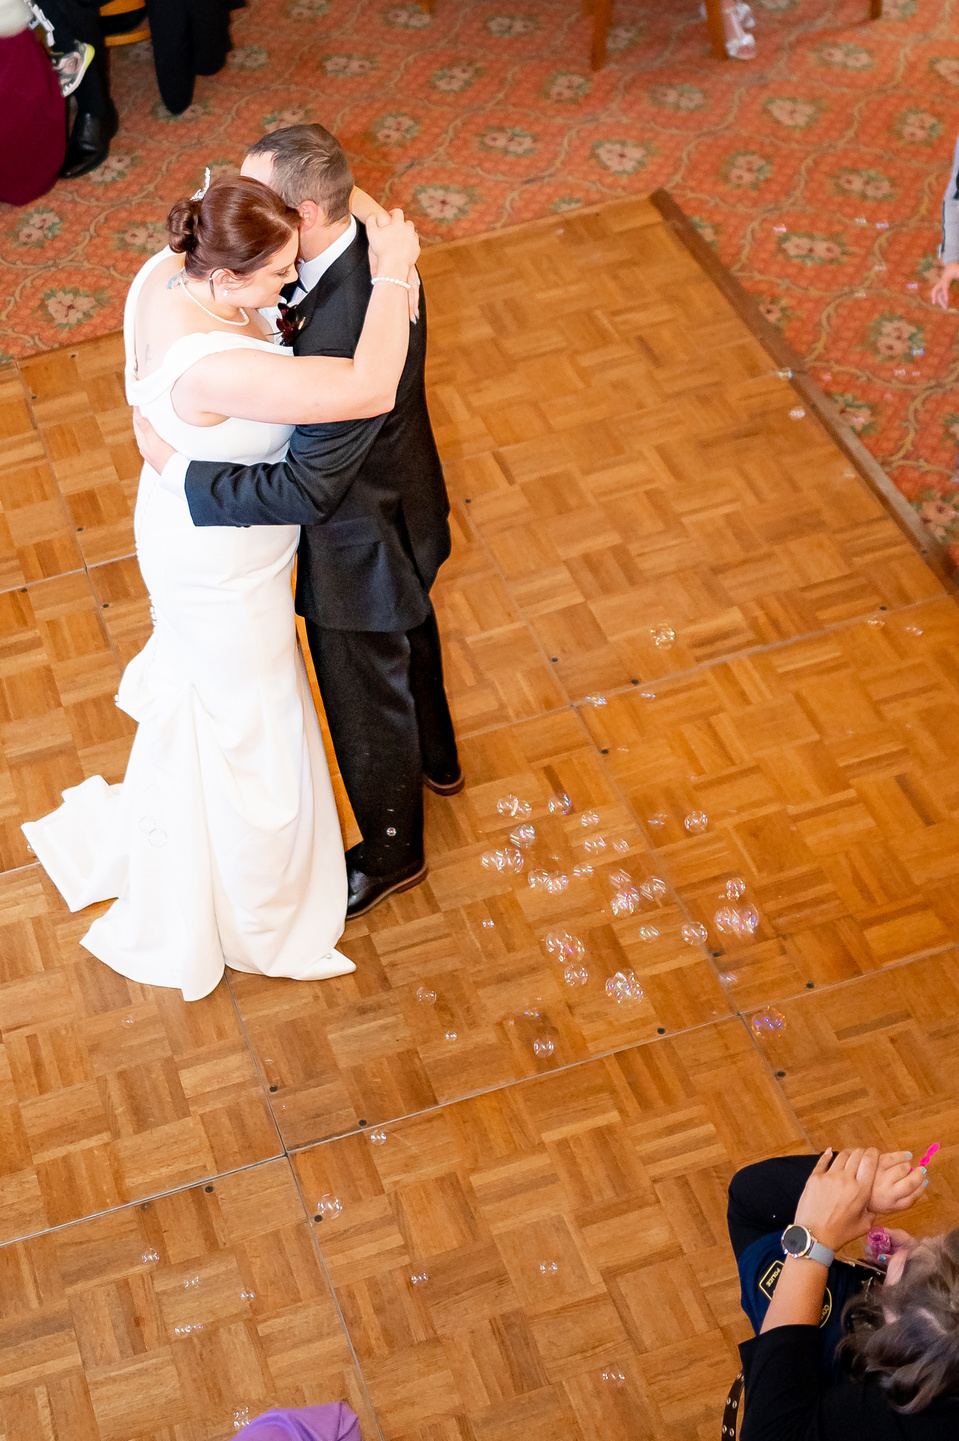 A slow dancing newlyweds on a dancing floor.